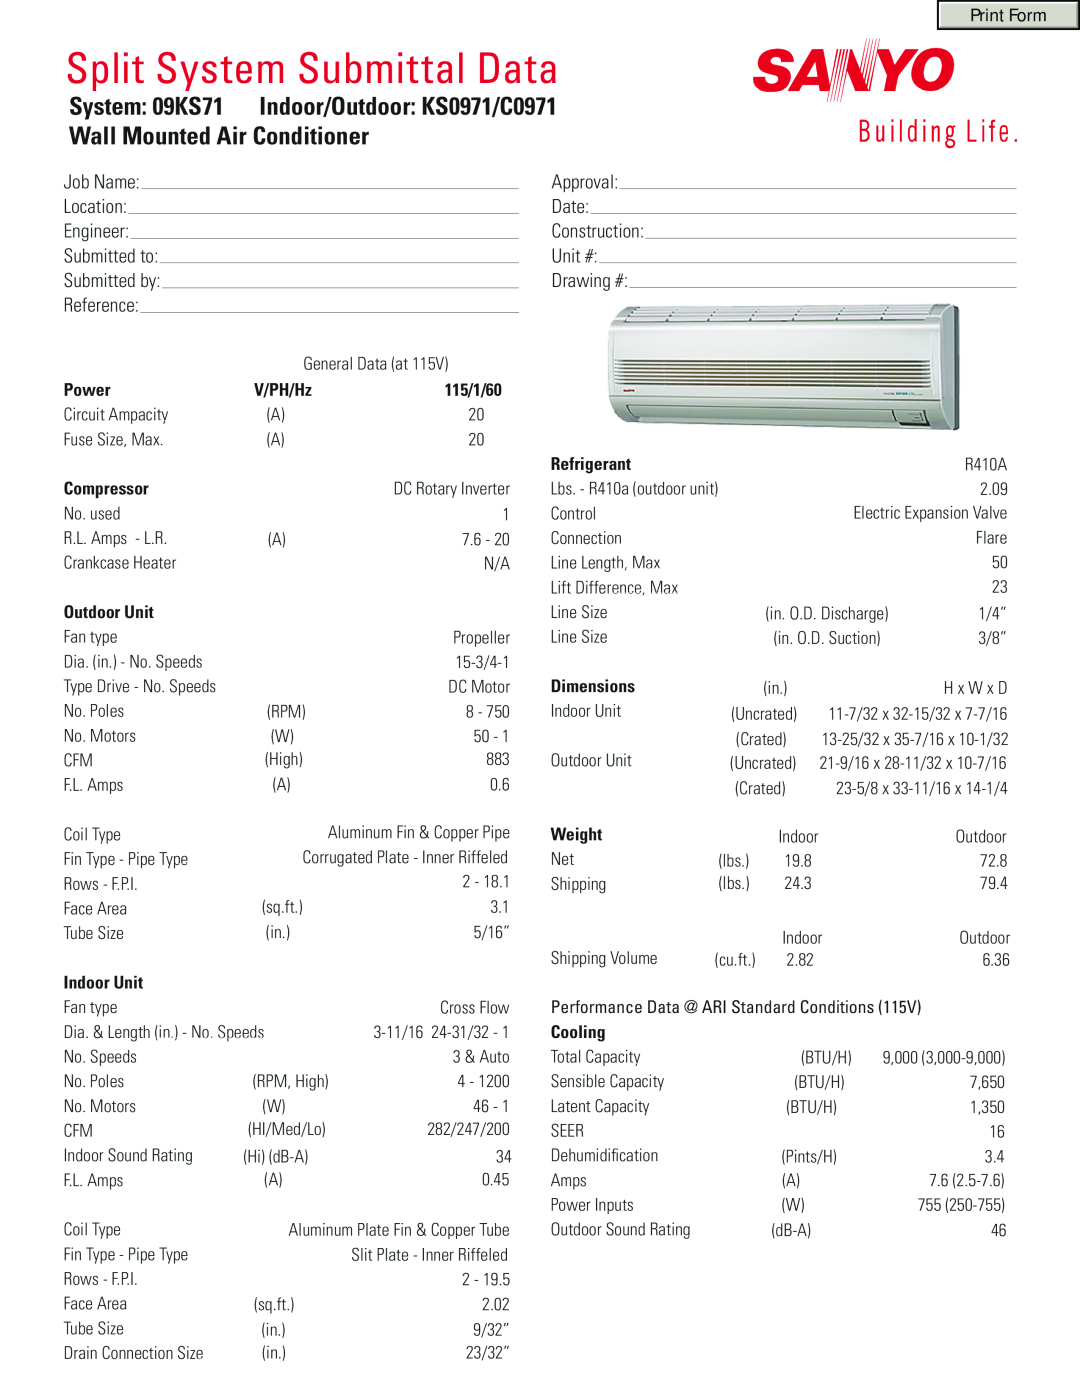 Sanyo 09KS71 dimensions Power, 115/1/60, Compressor, Outdoor Unit, Indoor Unit, Refrigerant, Dimensions, Weight, Cooling 